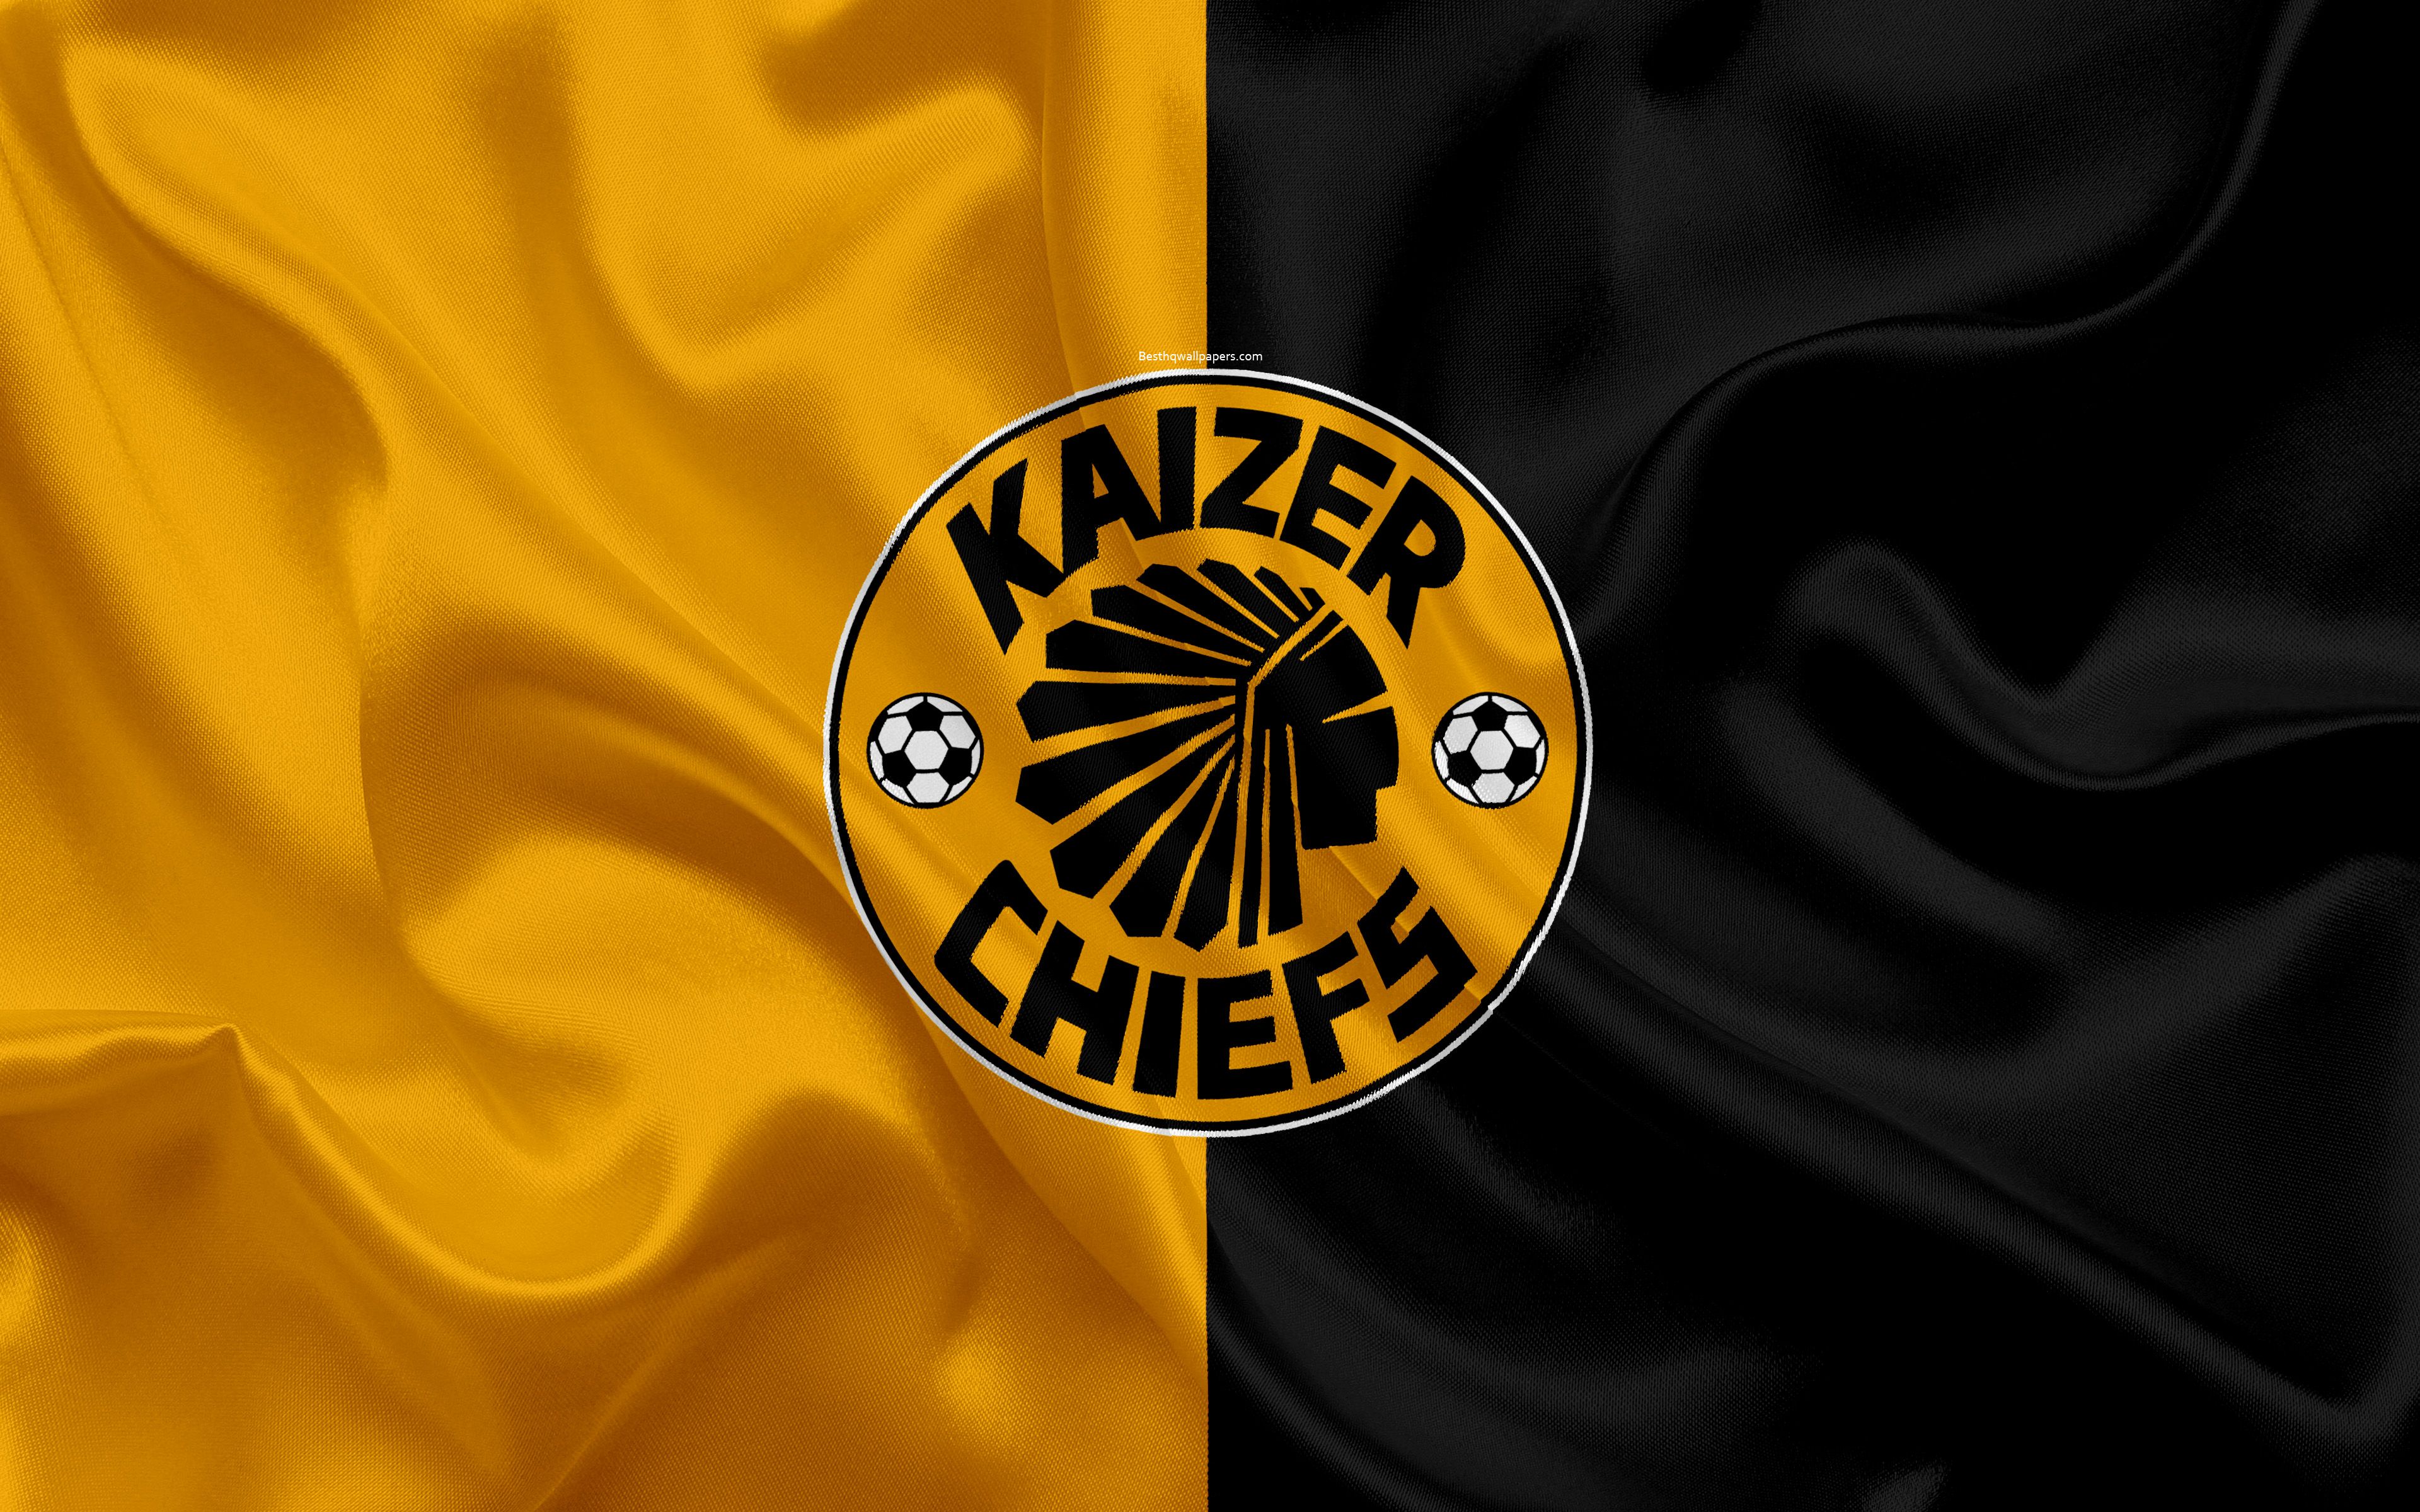 Download wallpaper Kaizer Chiefs FC, 4k, logo, orange black silk